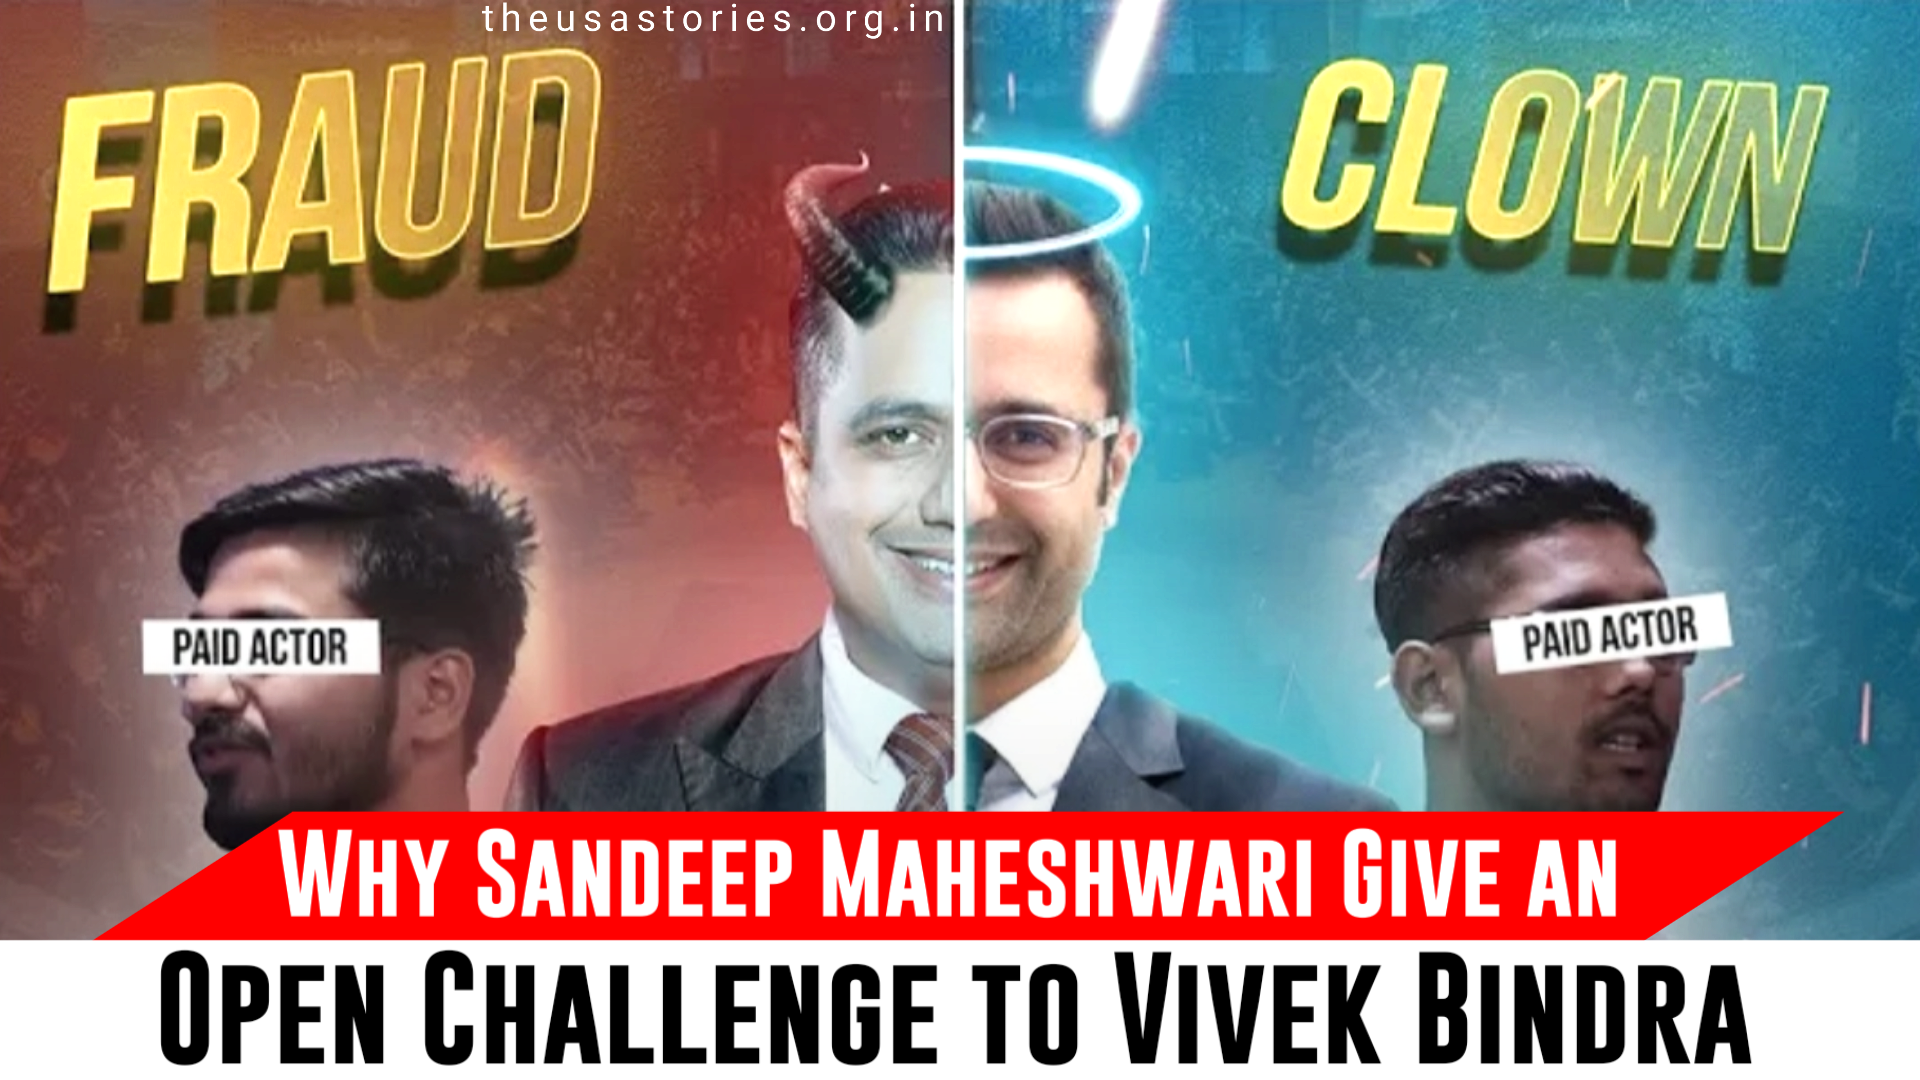 Why Sandeep Maheshwari give an open challenge to Vivek Bindra